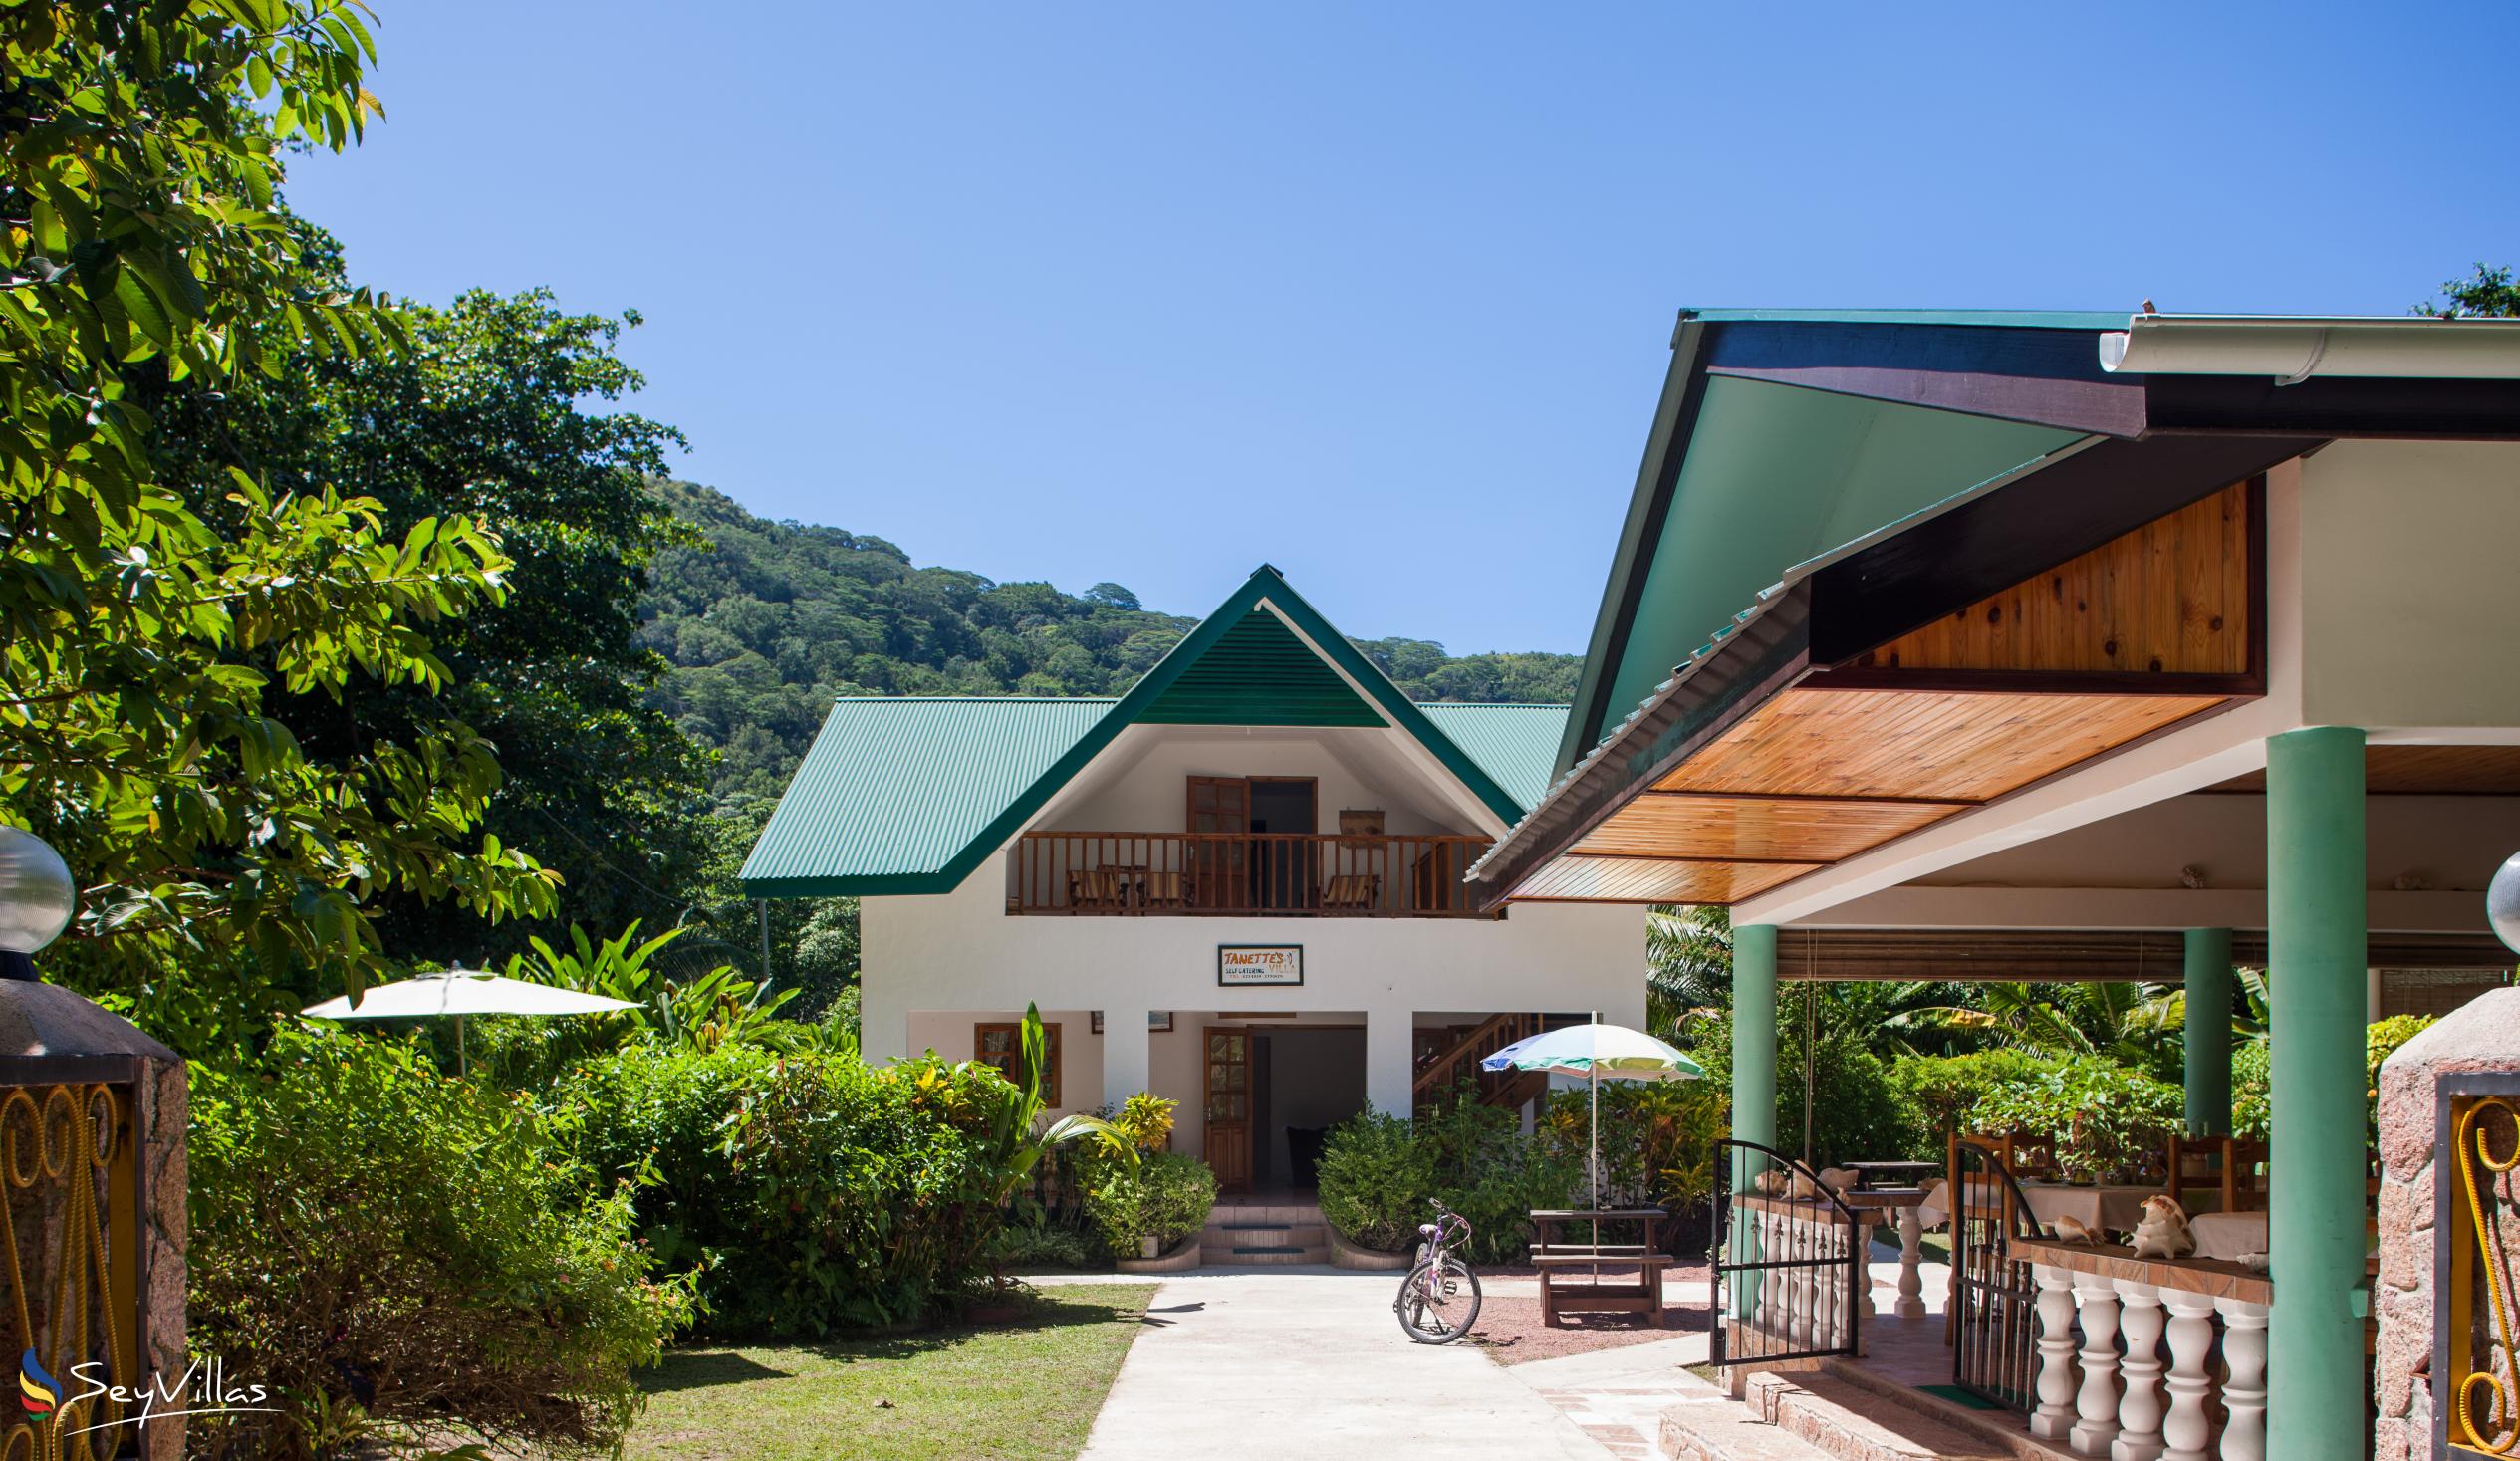 Photo 2: Tannette's Villa - Outdoor area - La Digue (Seychelles)